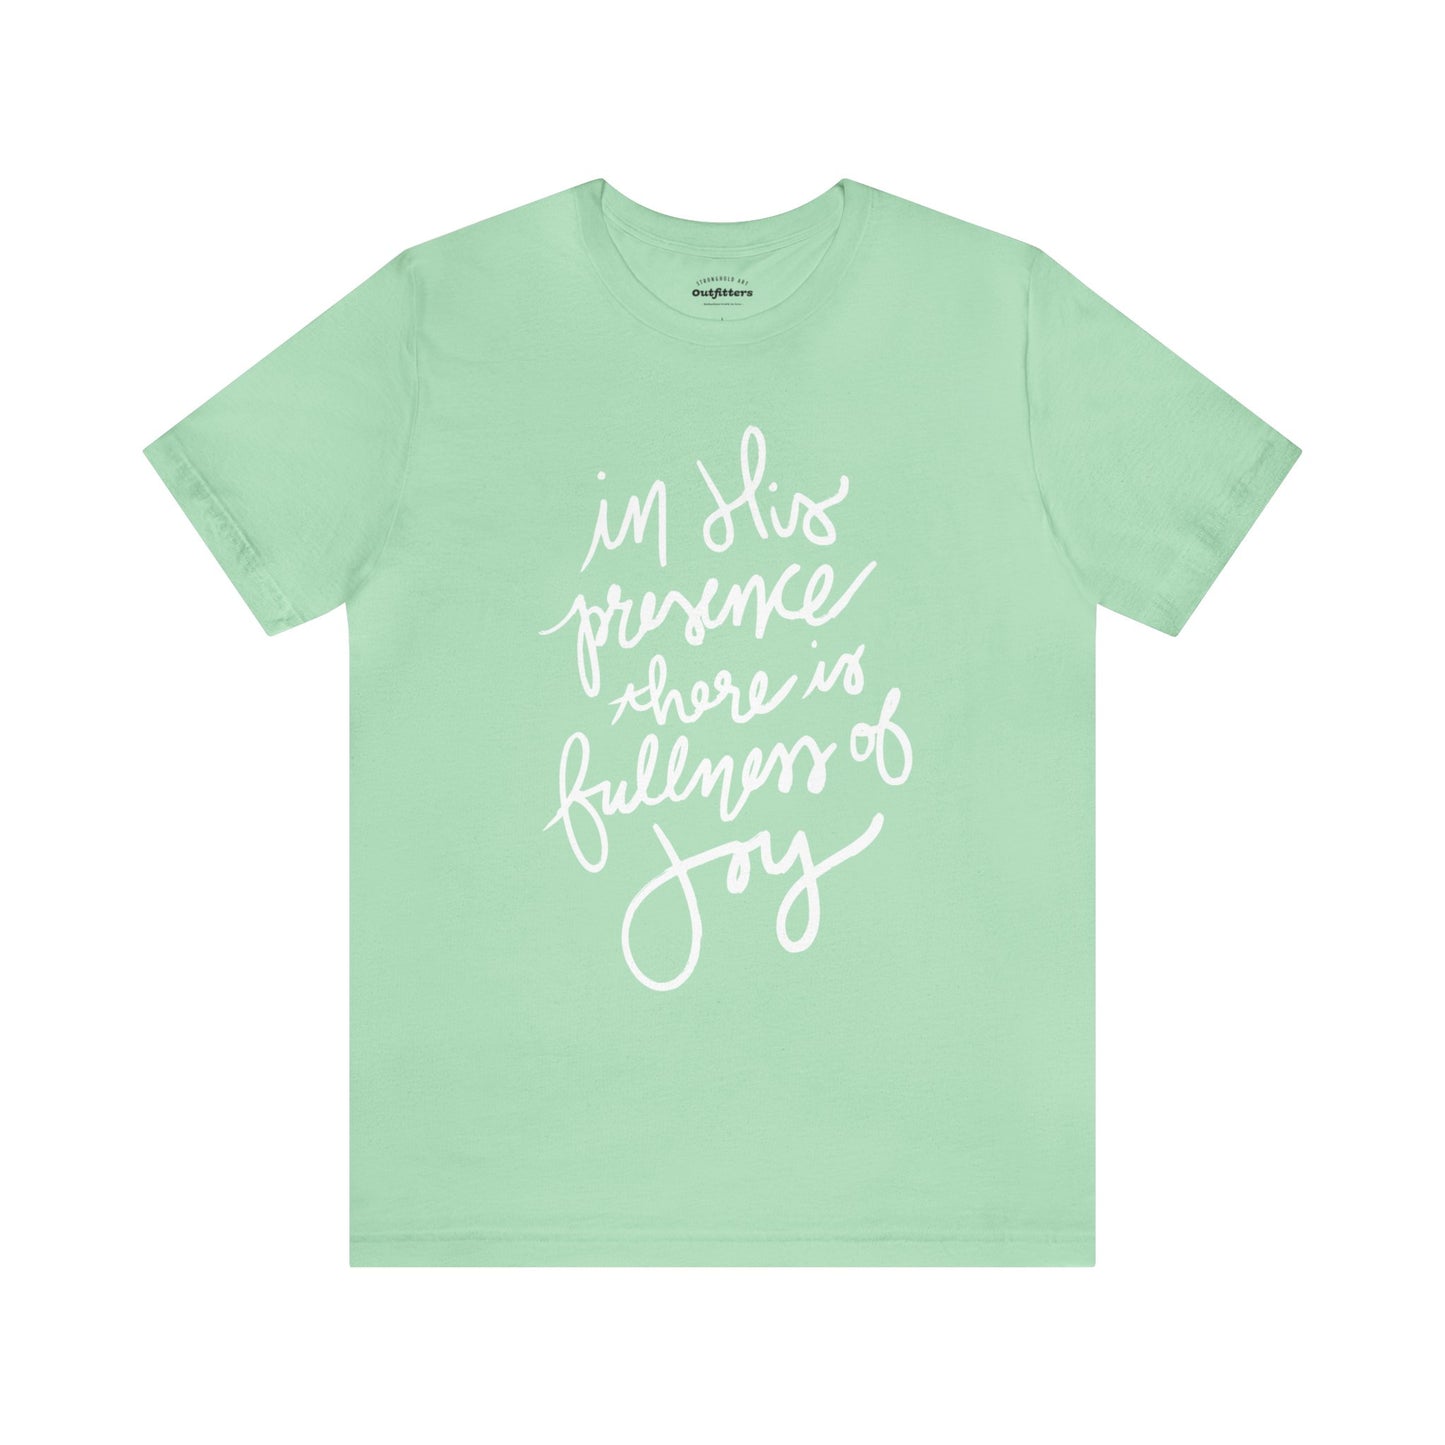 Fullness of Joy T-shirt